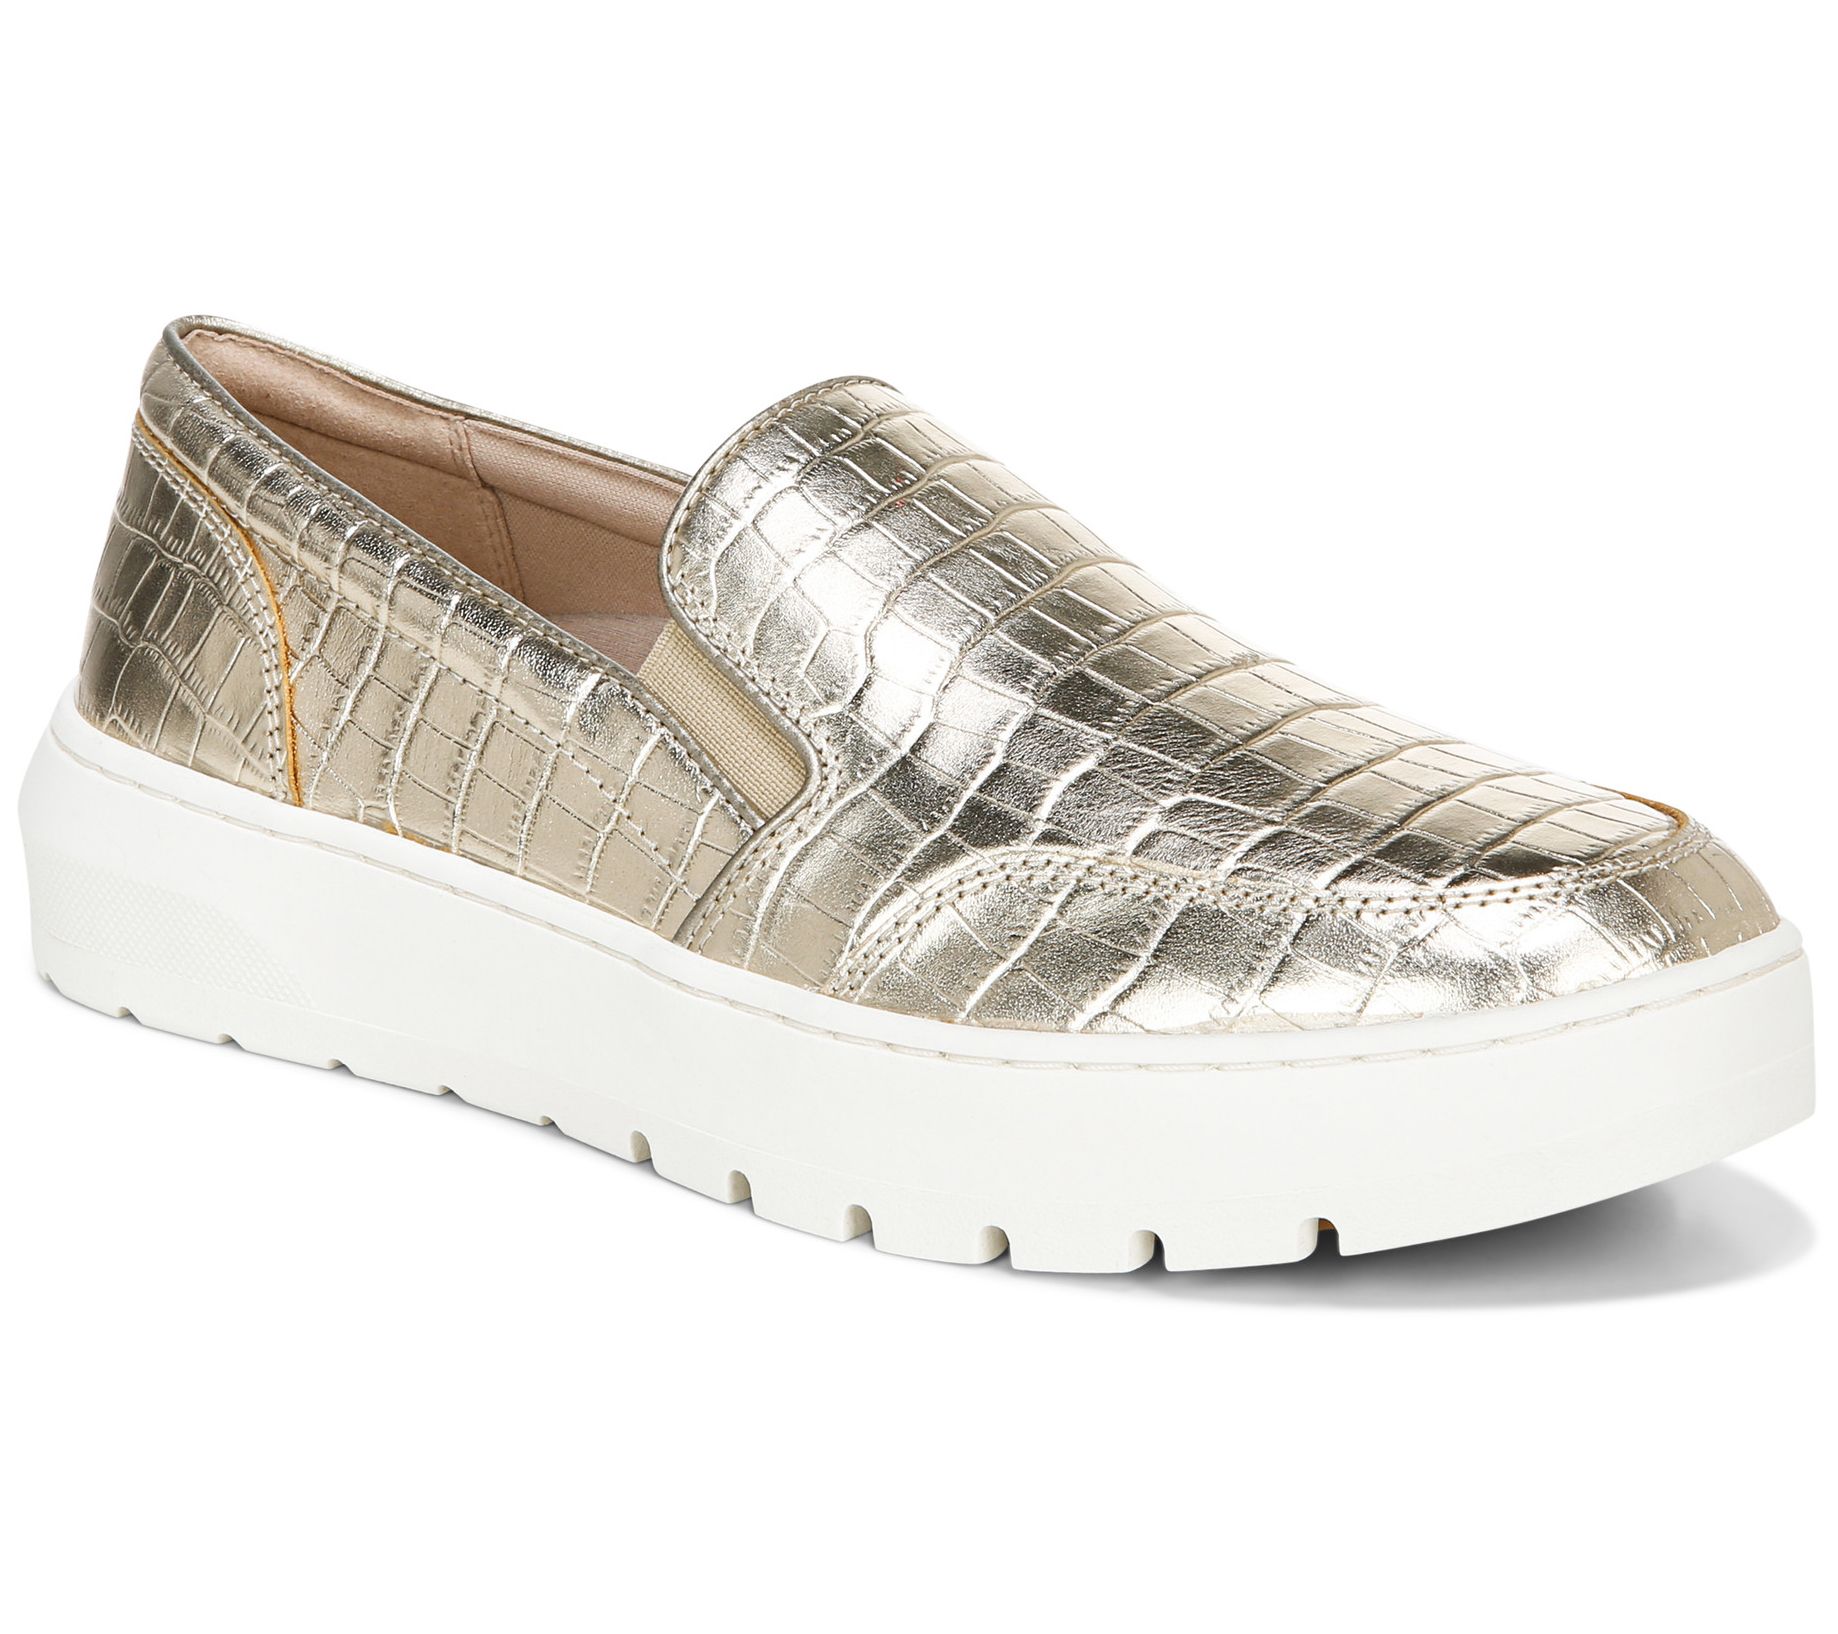 Vionic Slip-on Sneakers - Dinora Croc Metallic - QVC.com